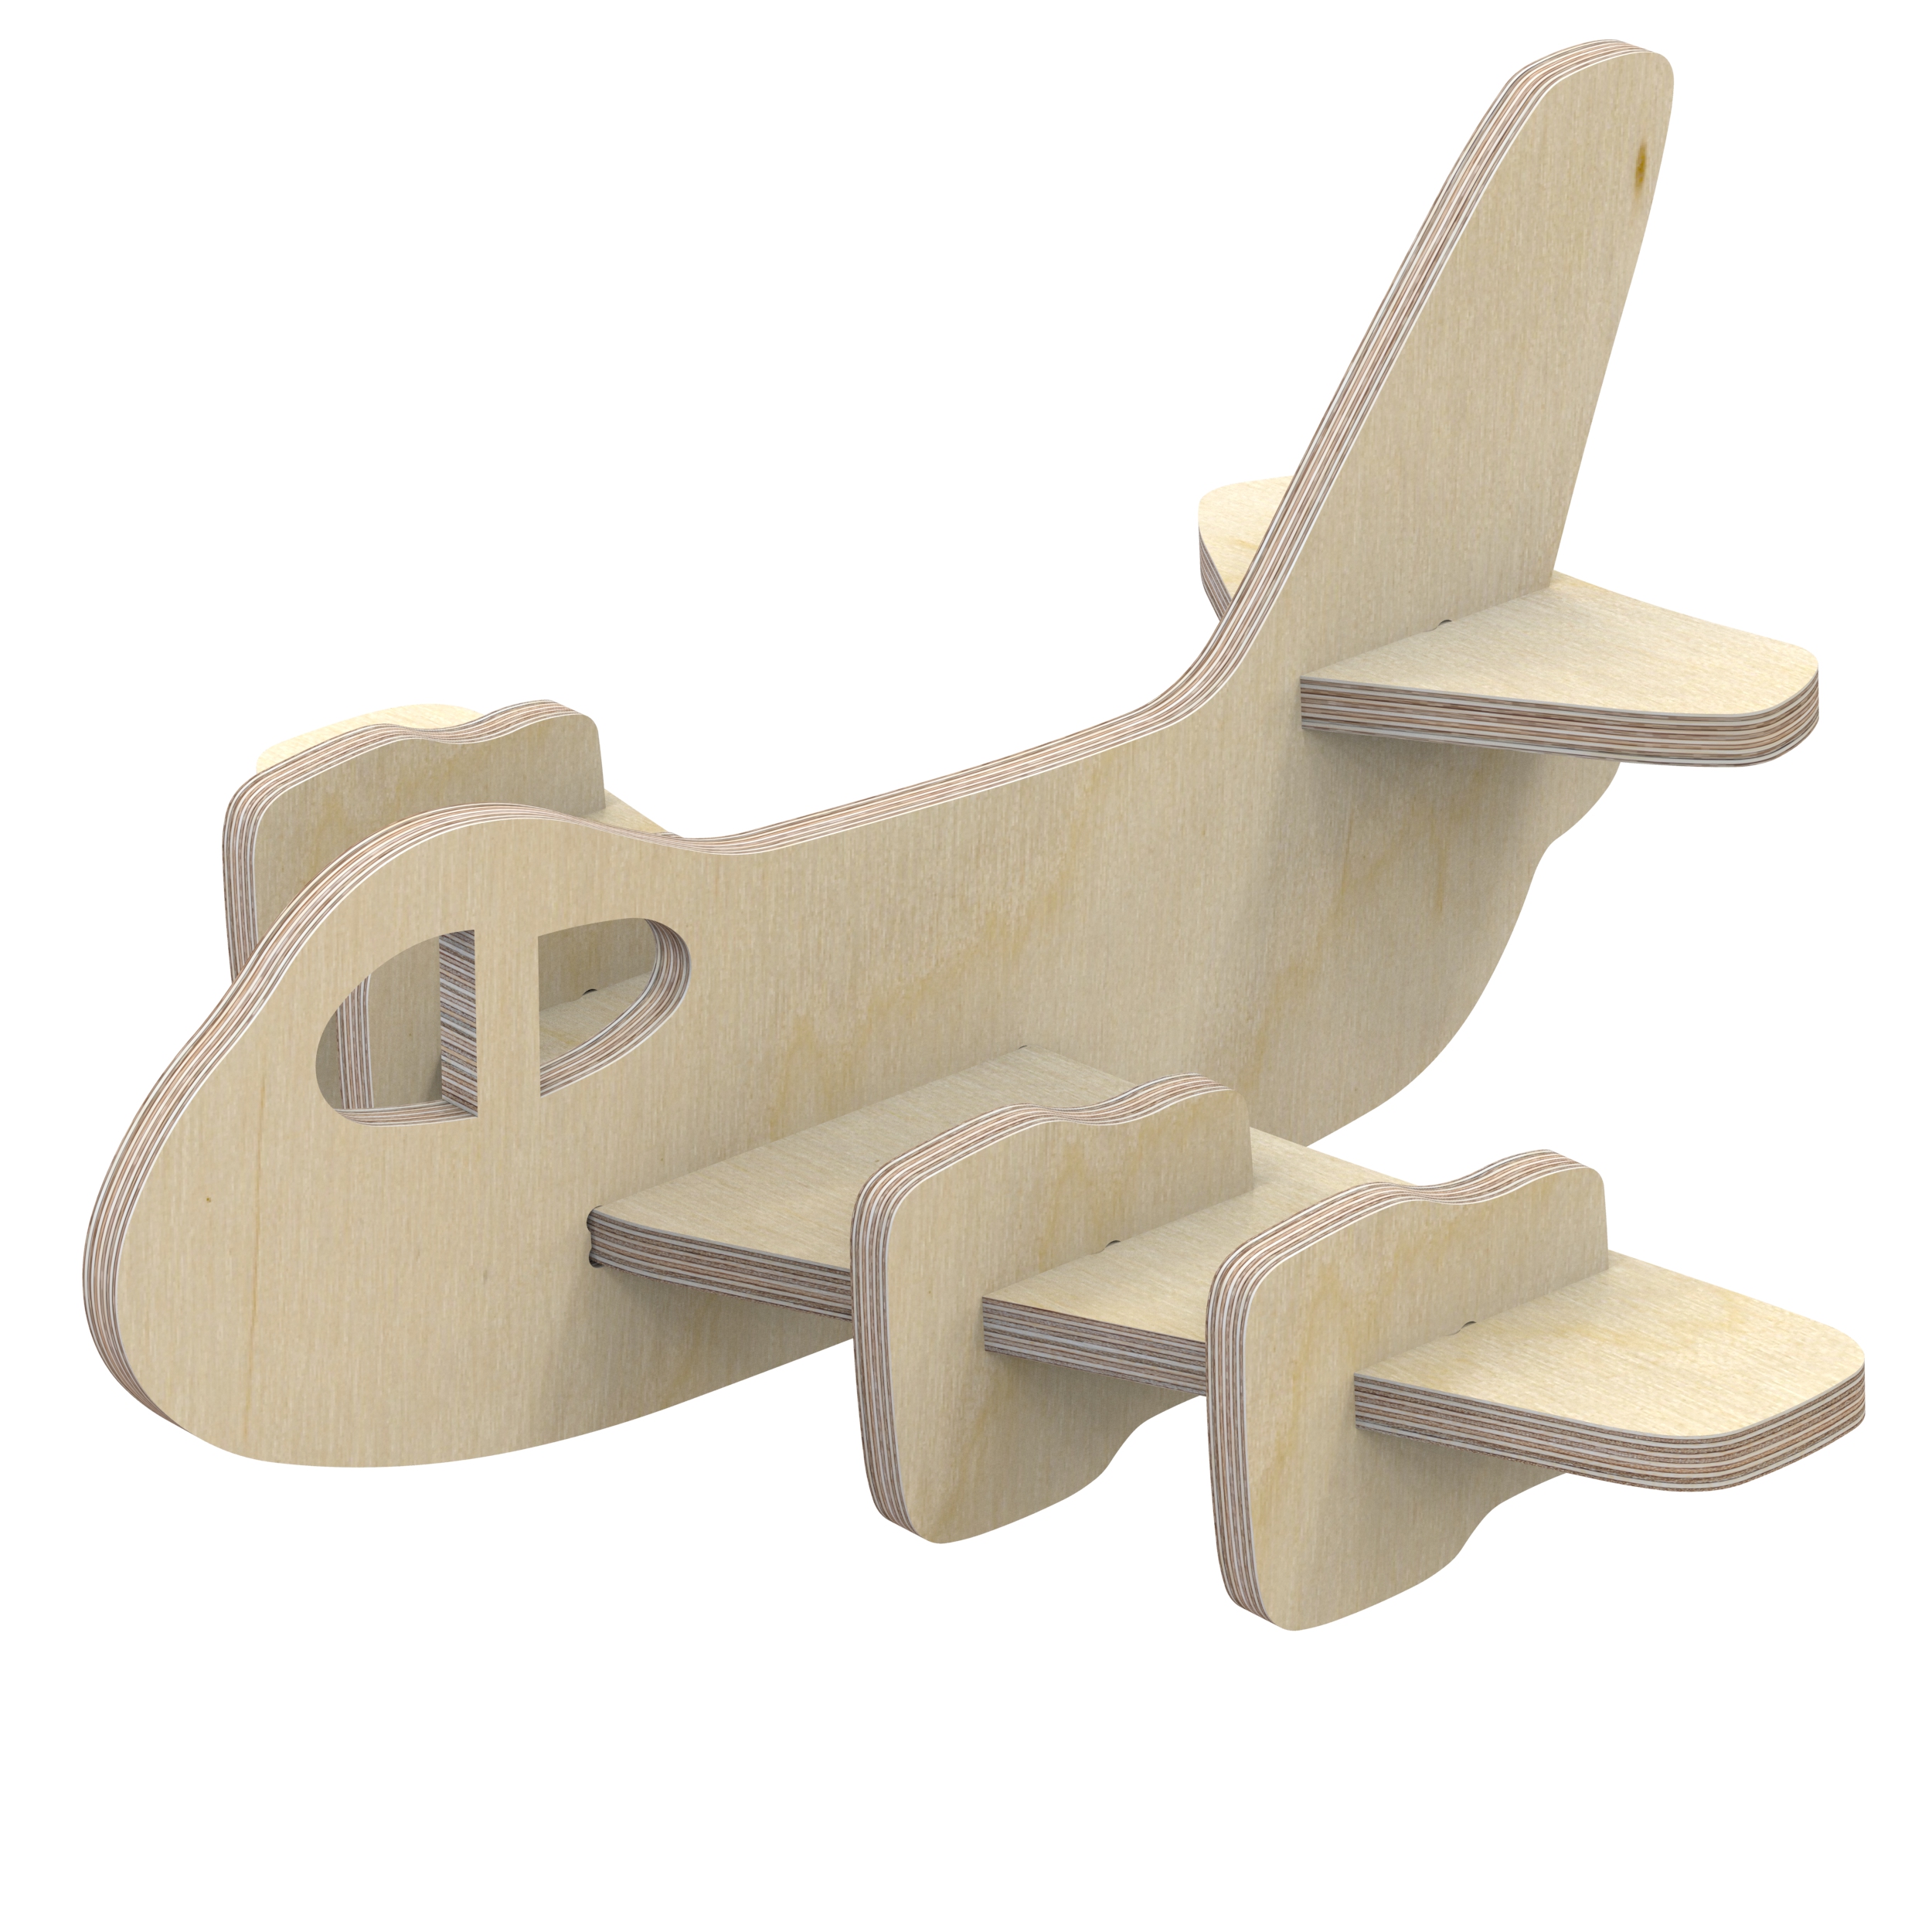 Apache 3D Holzbausatz Flugzeug Flieger Holz Steckpuzzle Holzpuzzle Kinder Bauen 